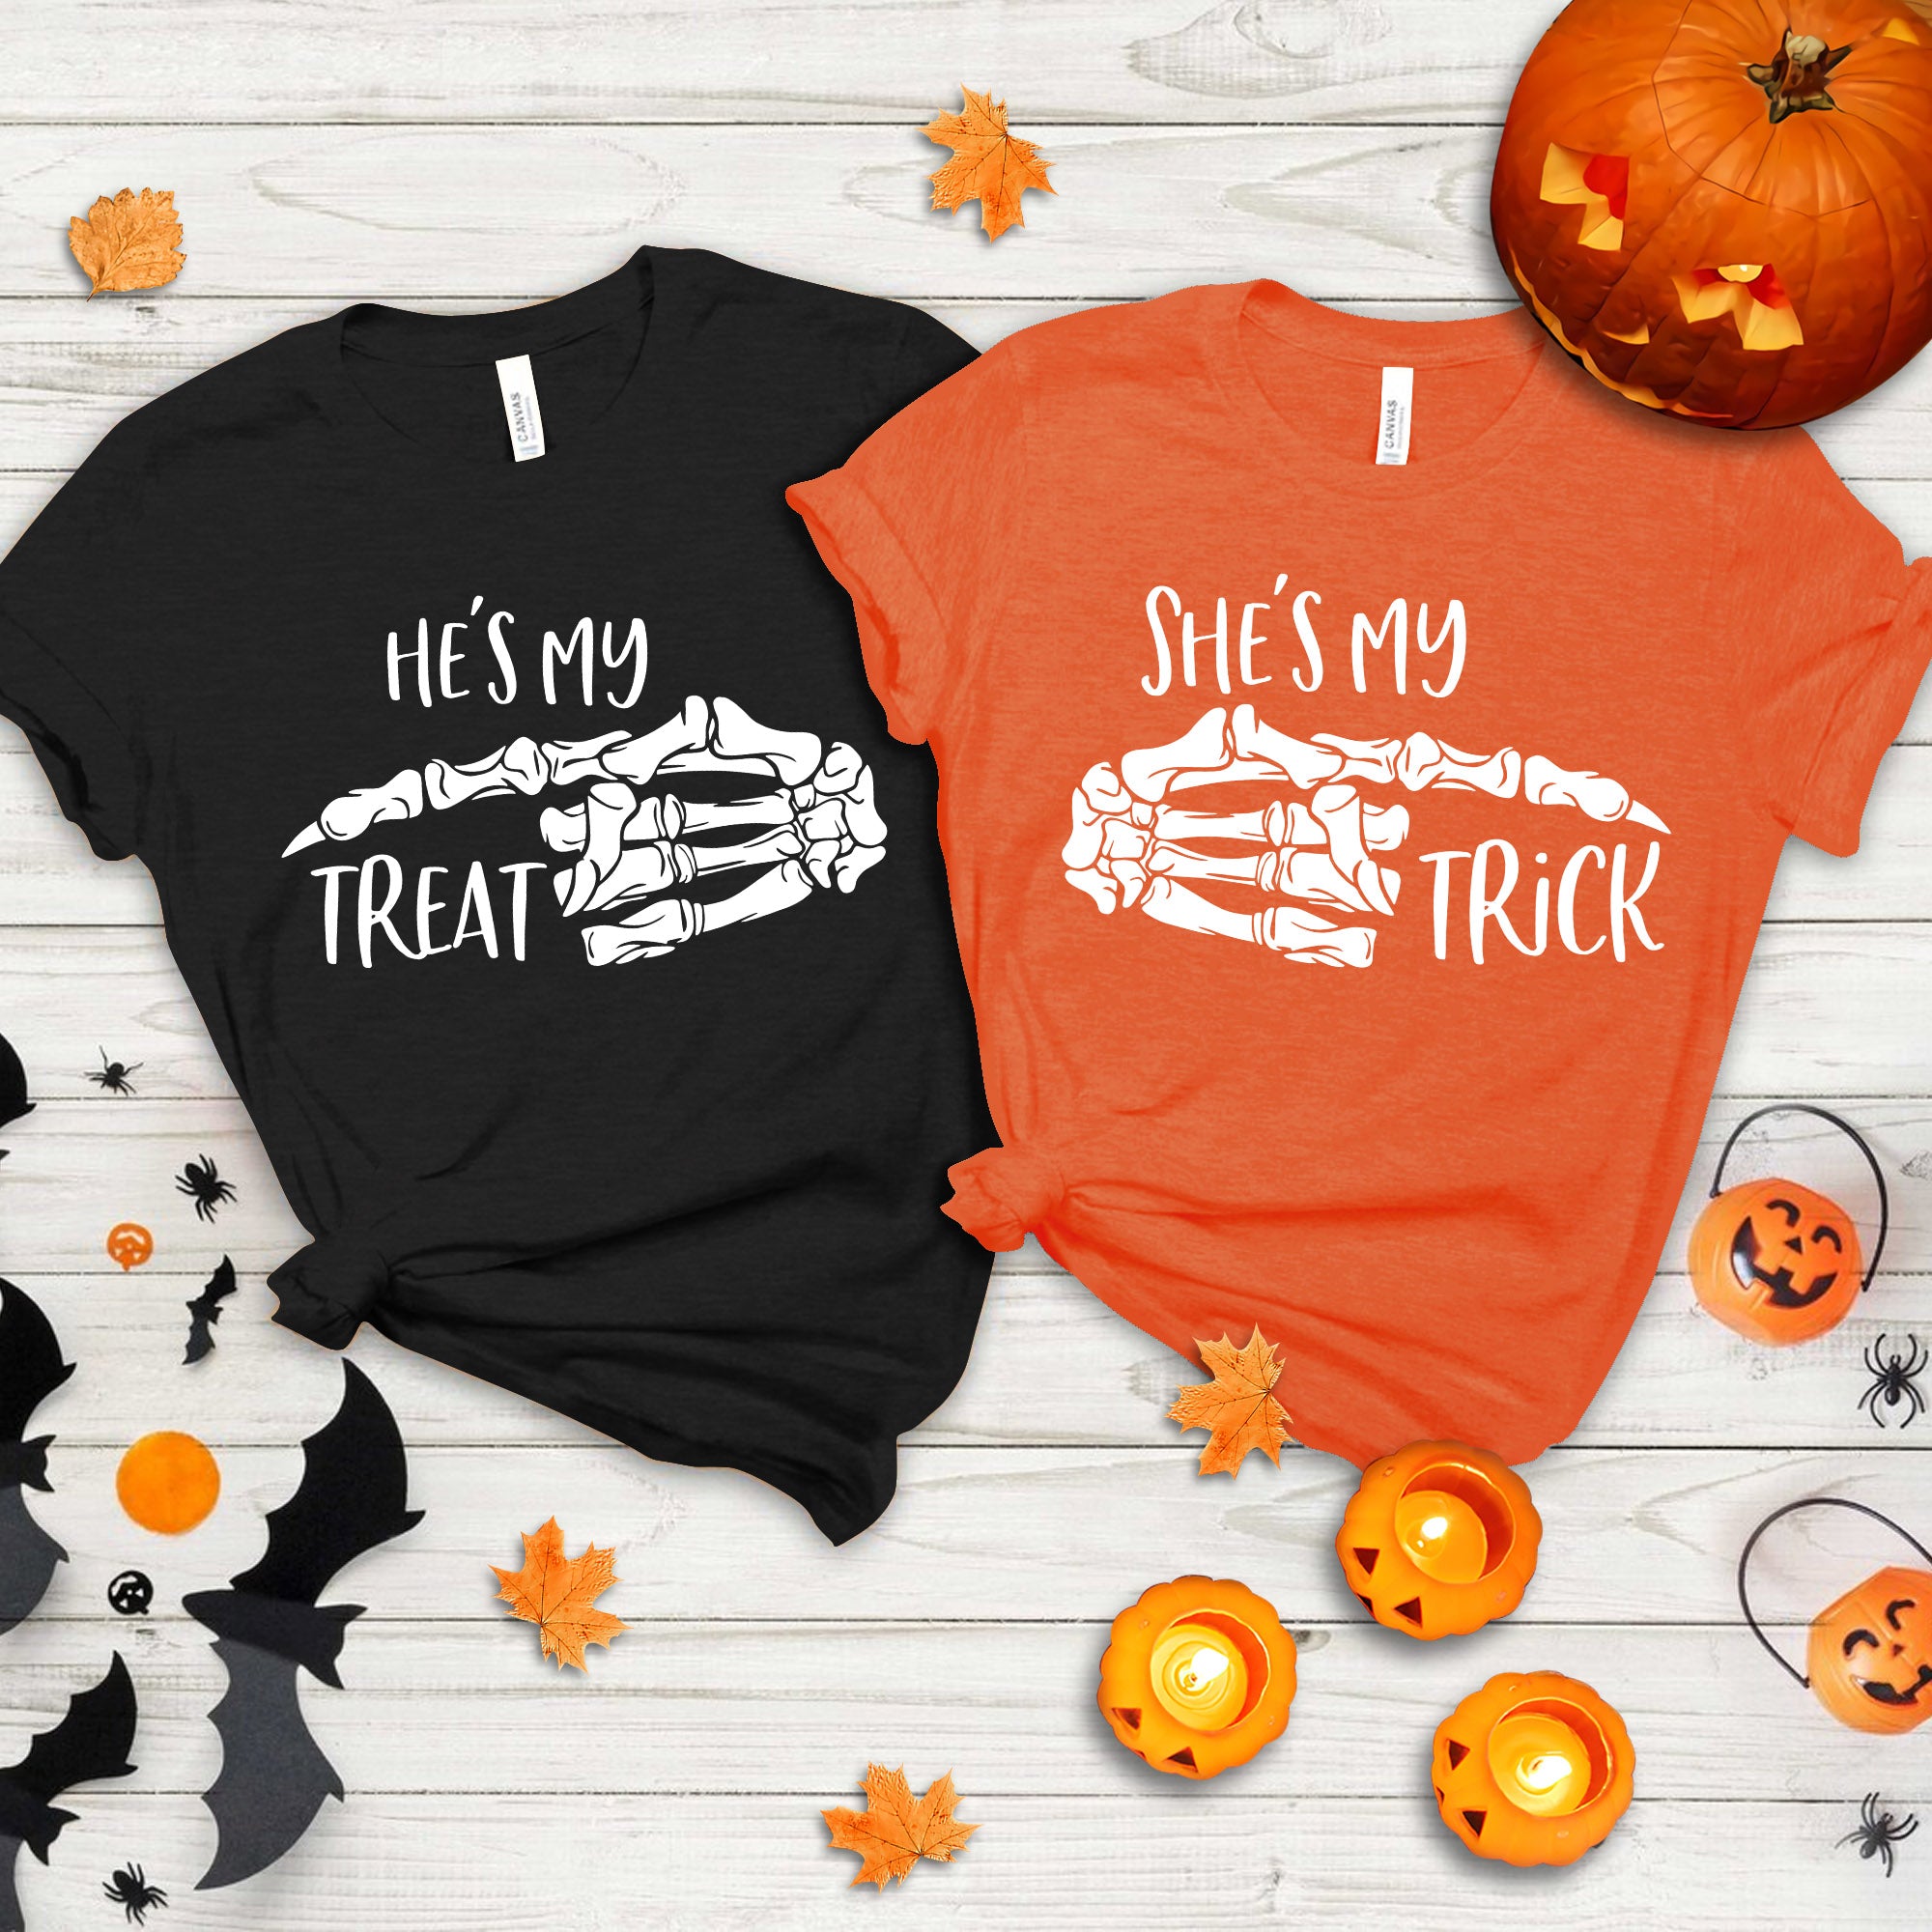 Halloween Couple Shirt – She Is My Trick, He Is My Treat